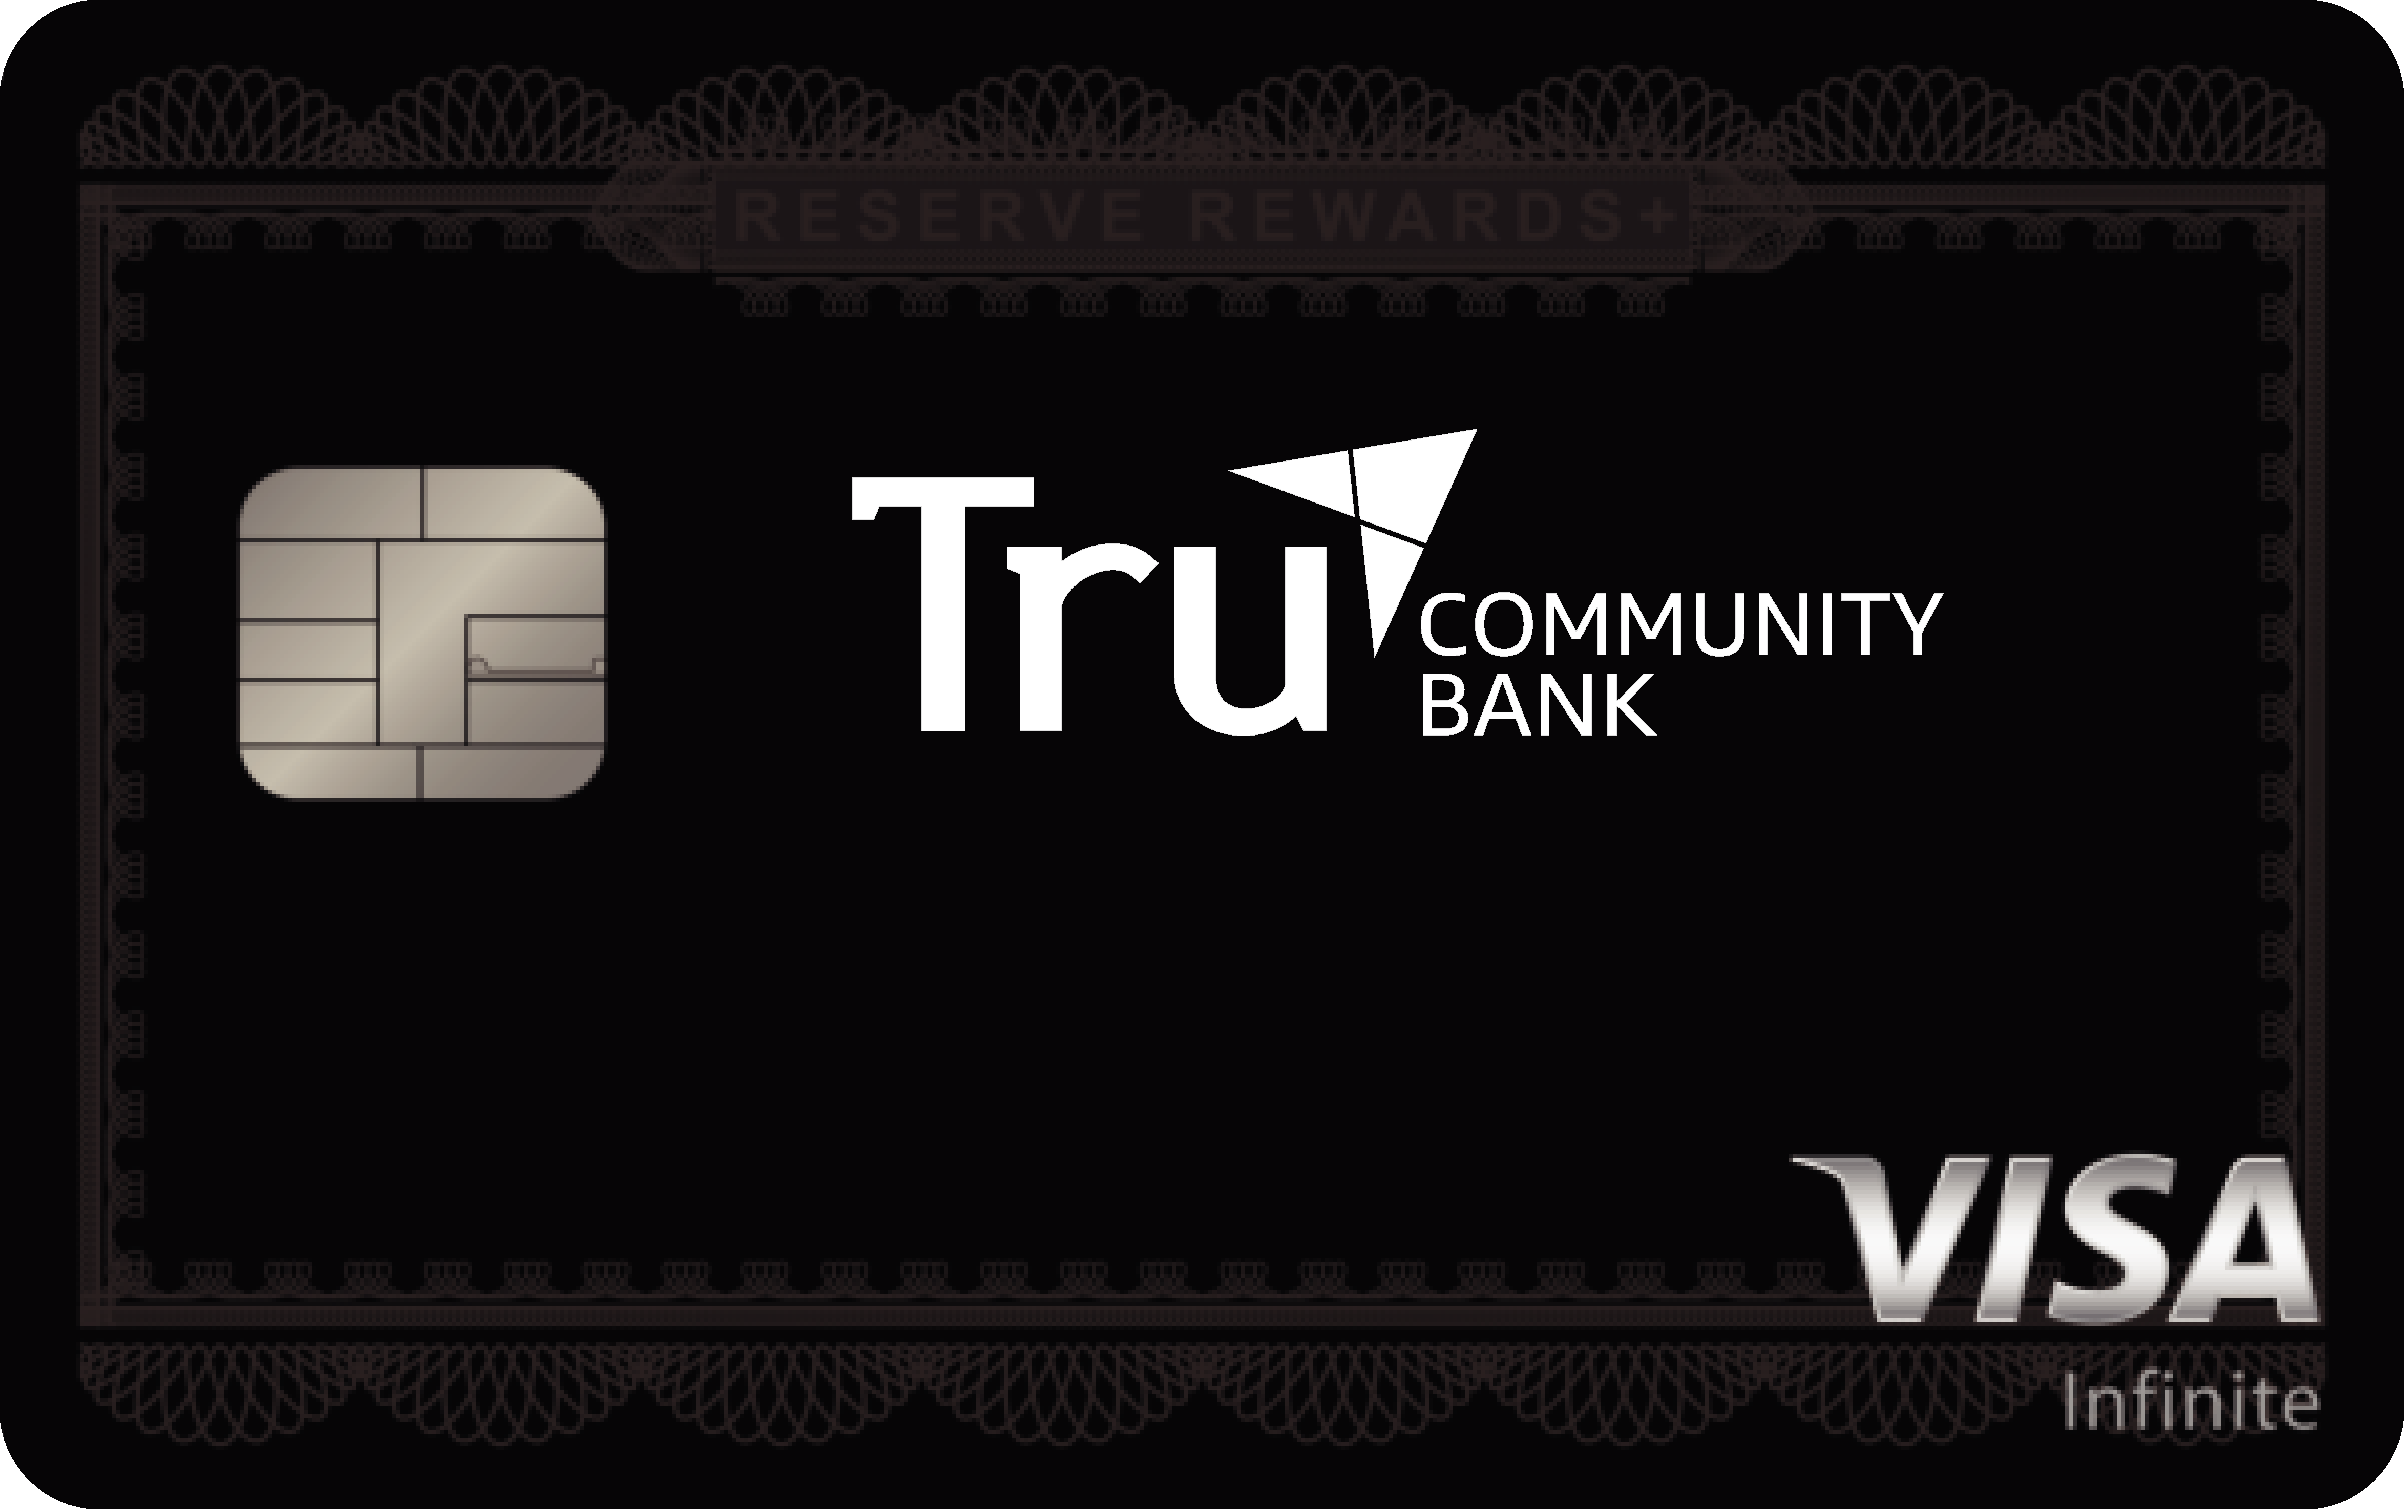 TruCommunity Bank